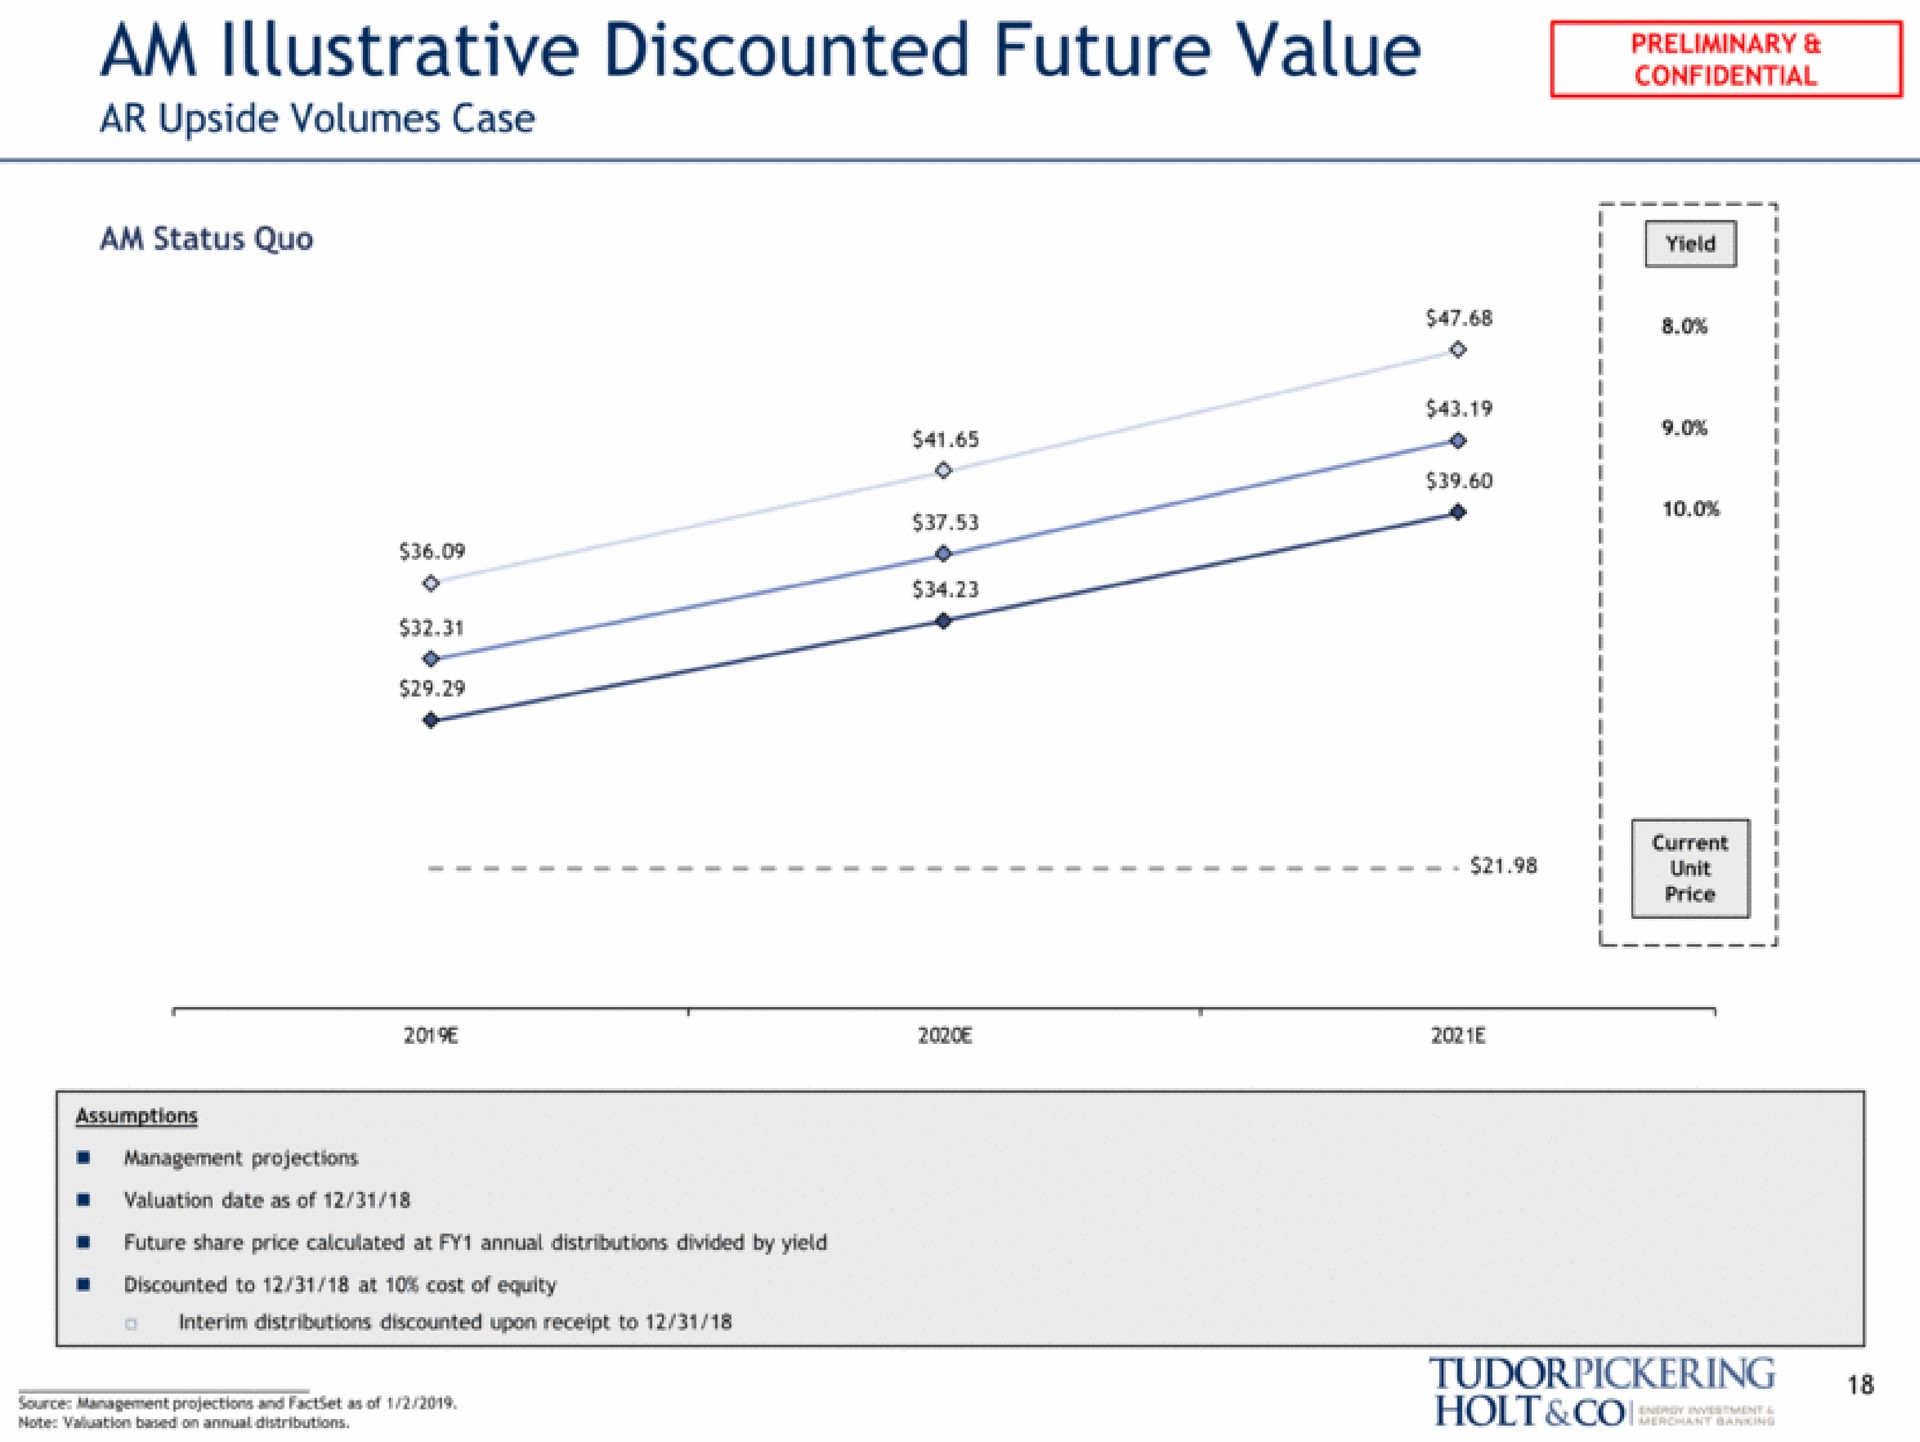 am illustrative discounted future value upside volumes case | Tudor, Pickering, Holt & Co